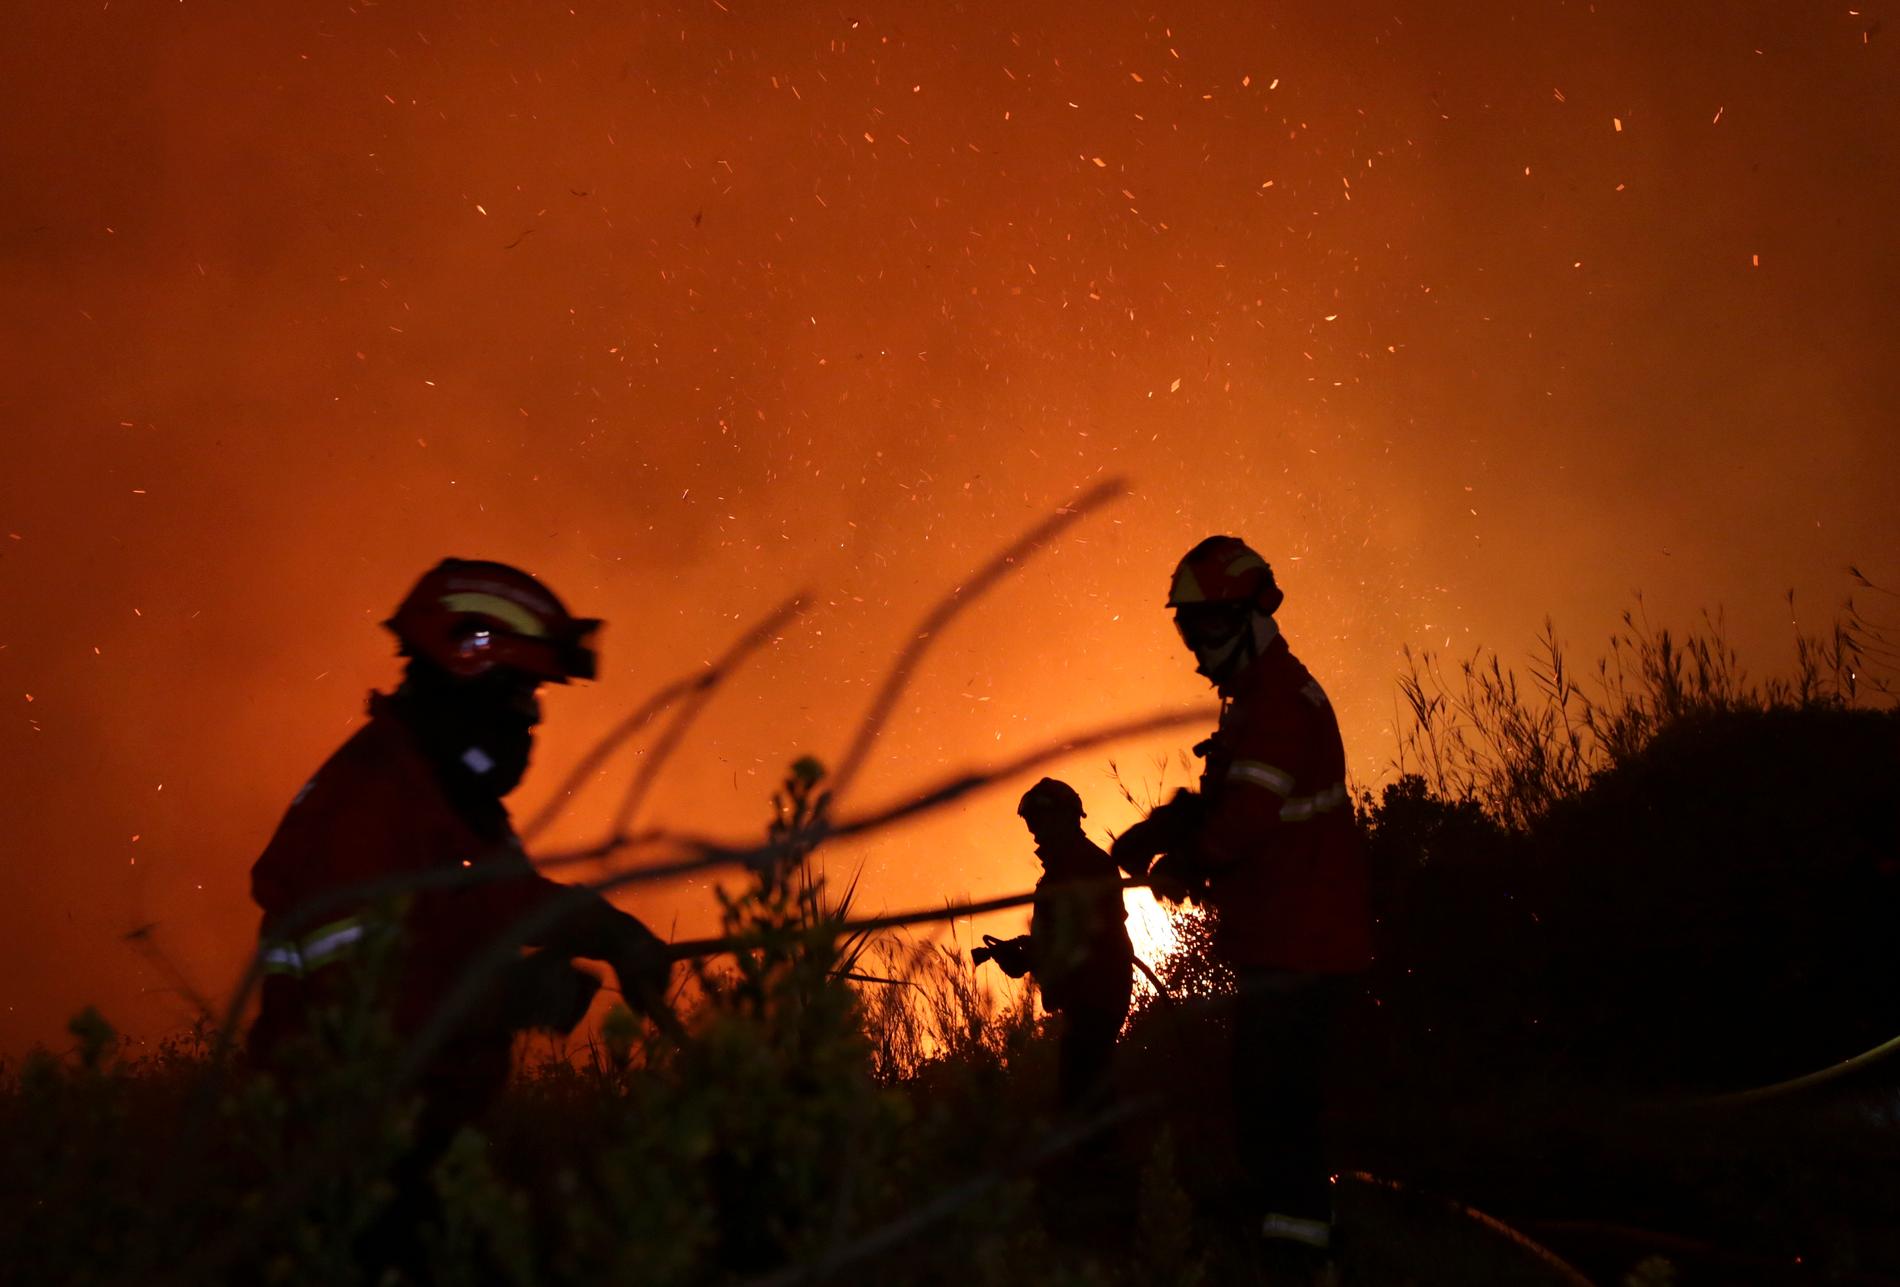 Skogsbrand i Portugal.